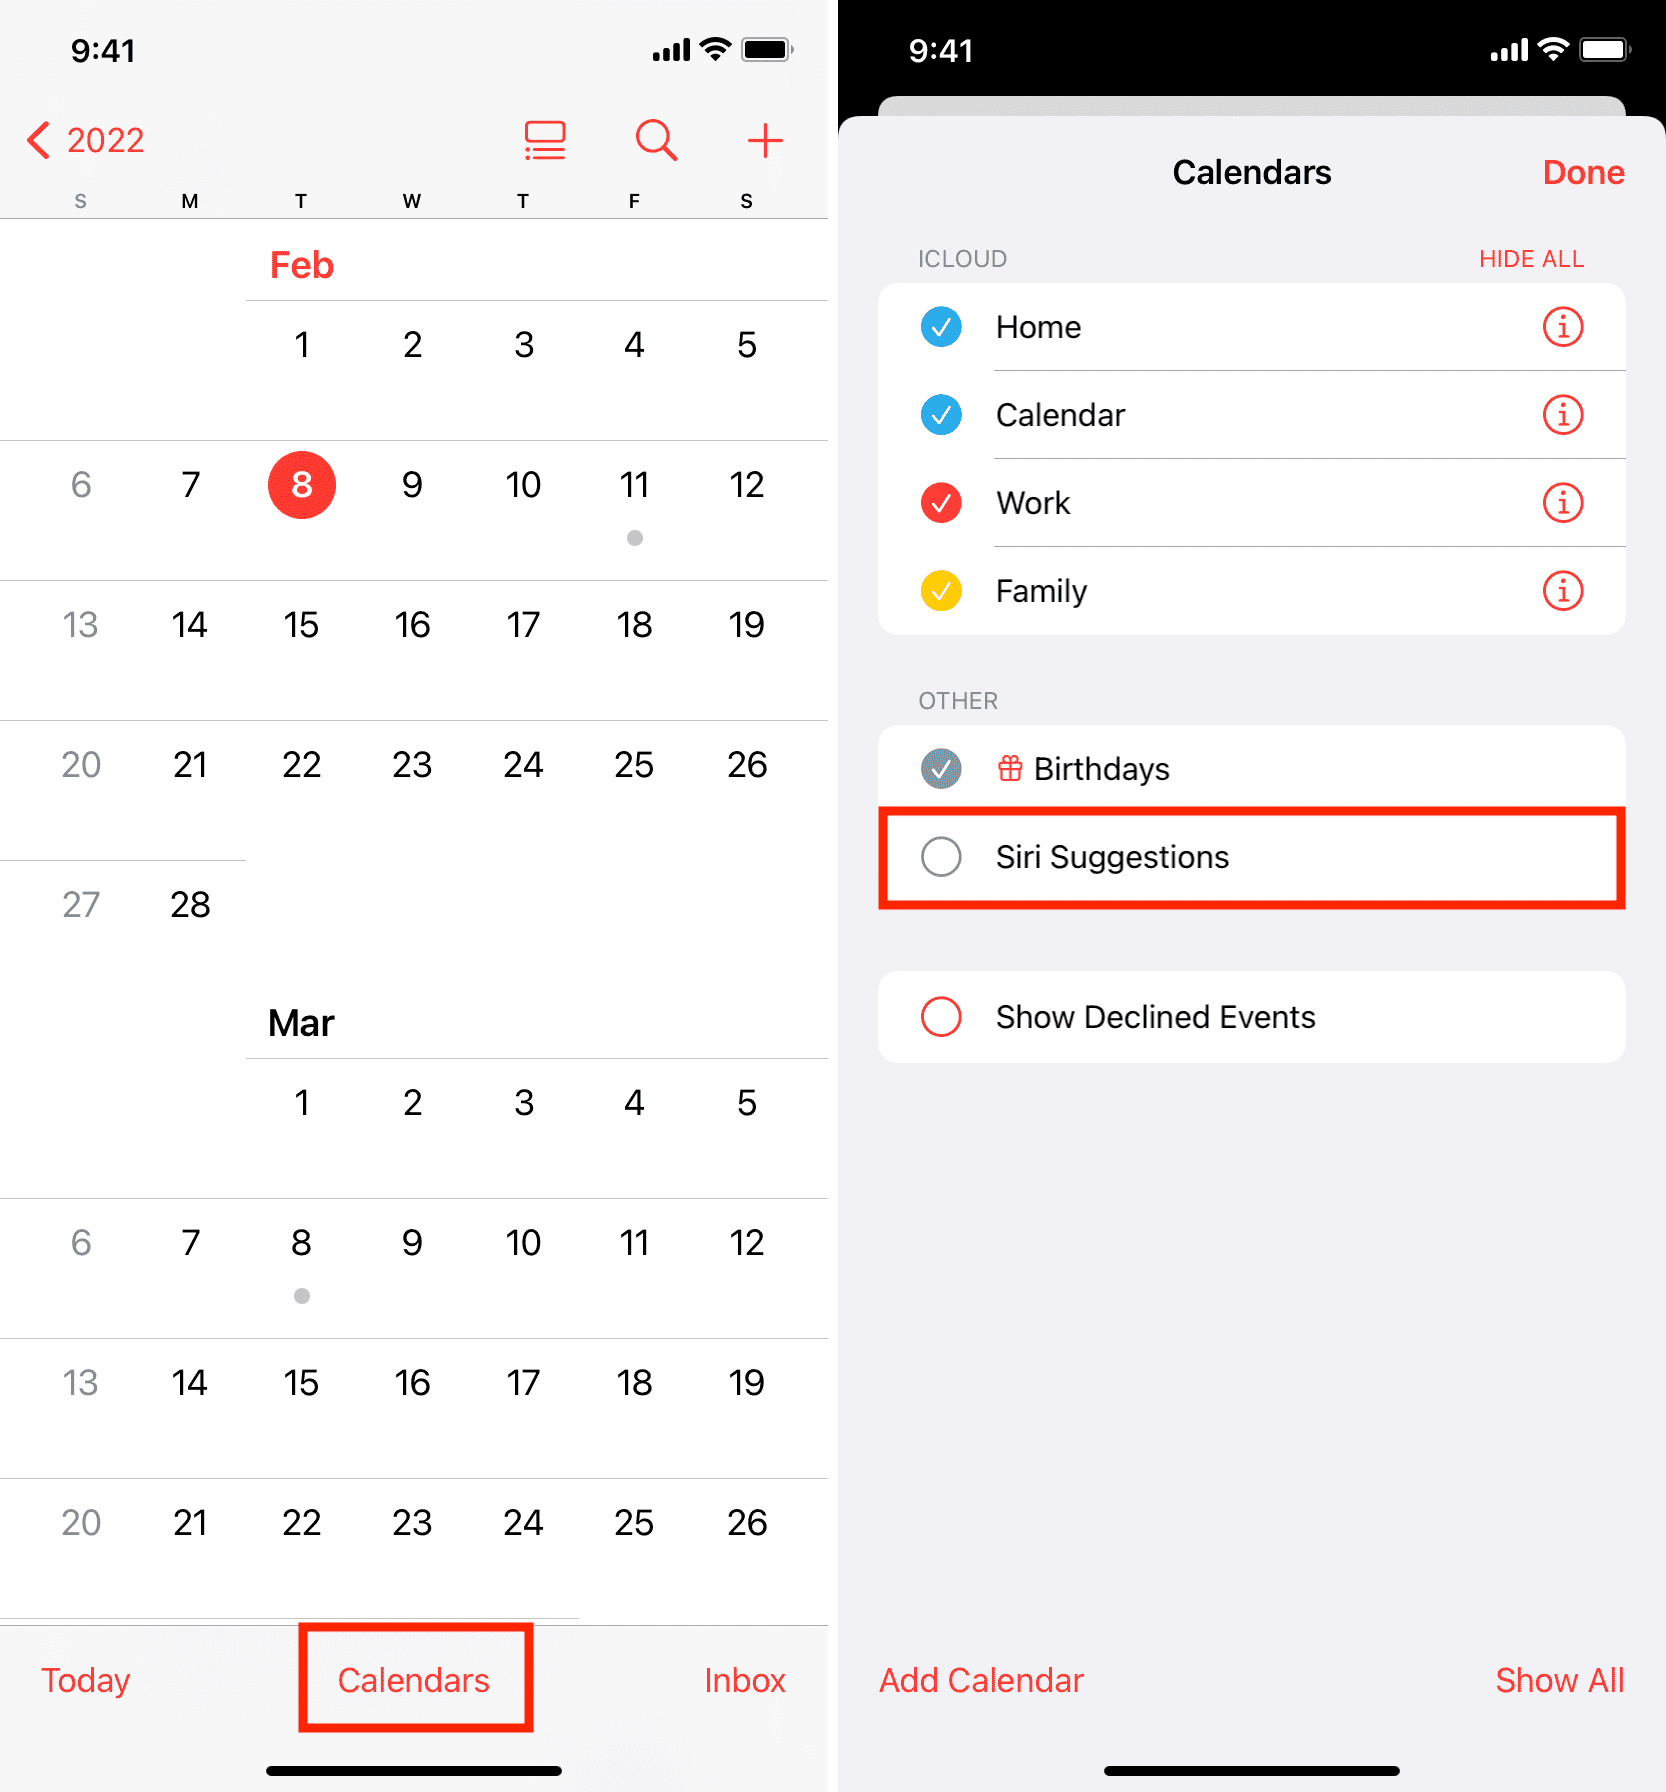 Disable Siri Suggestions in iOS Calendar app